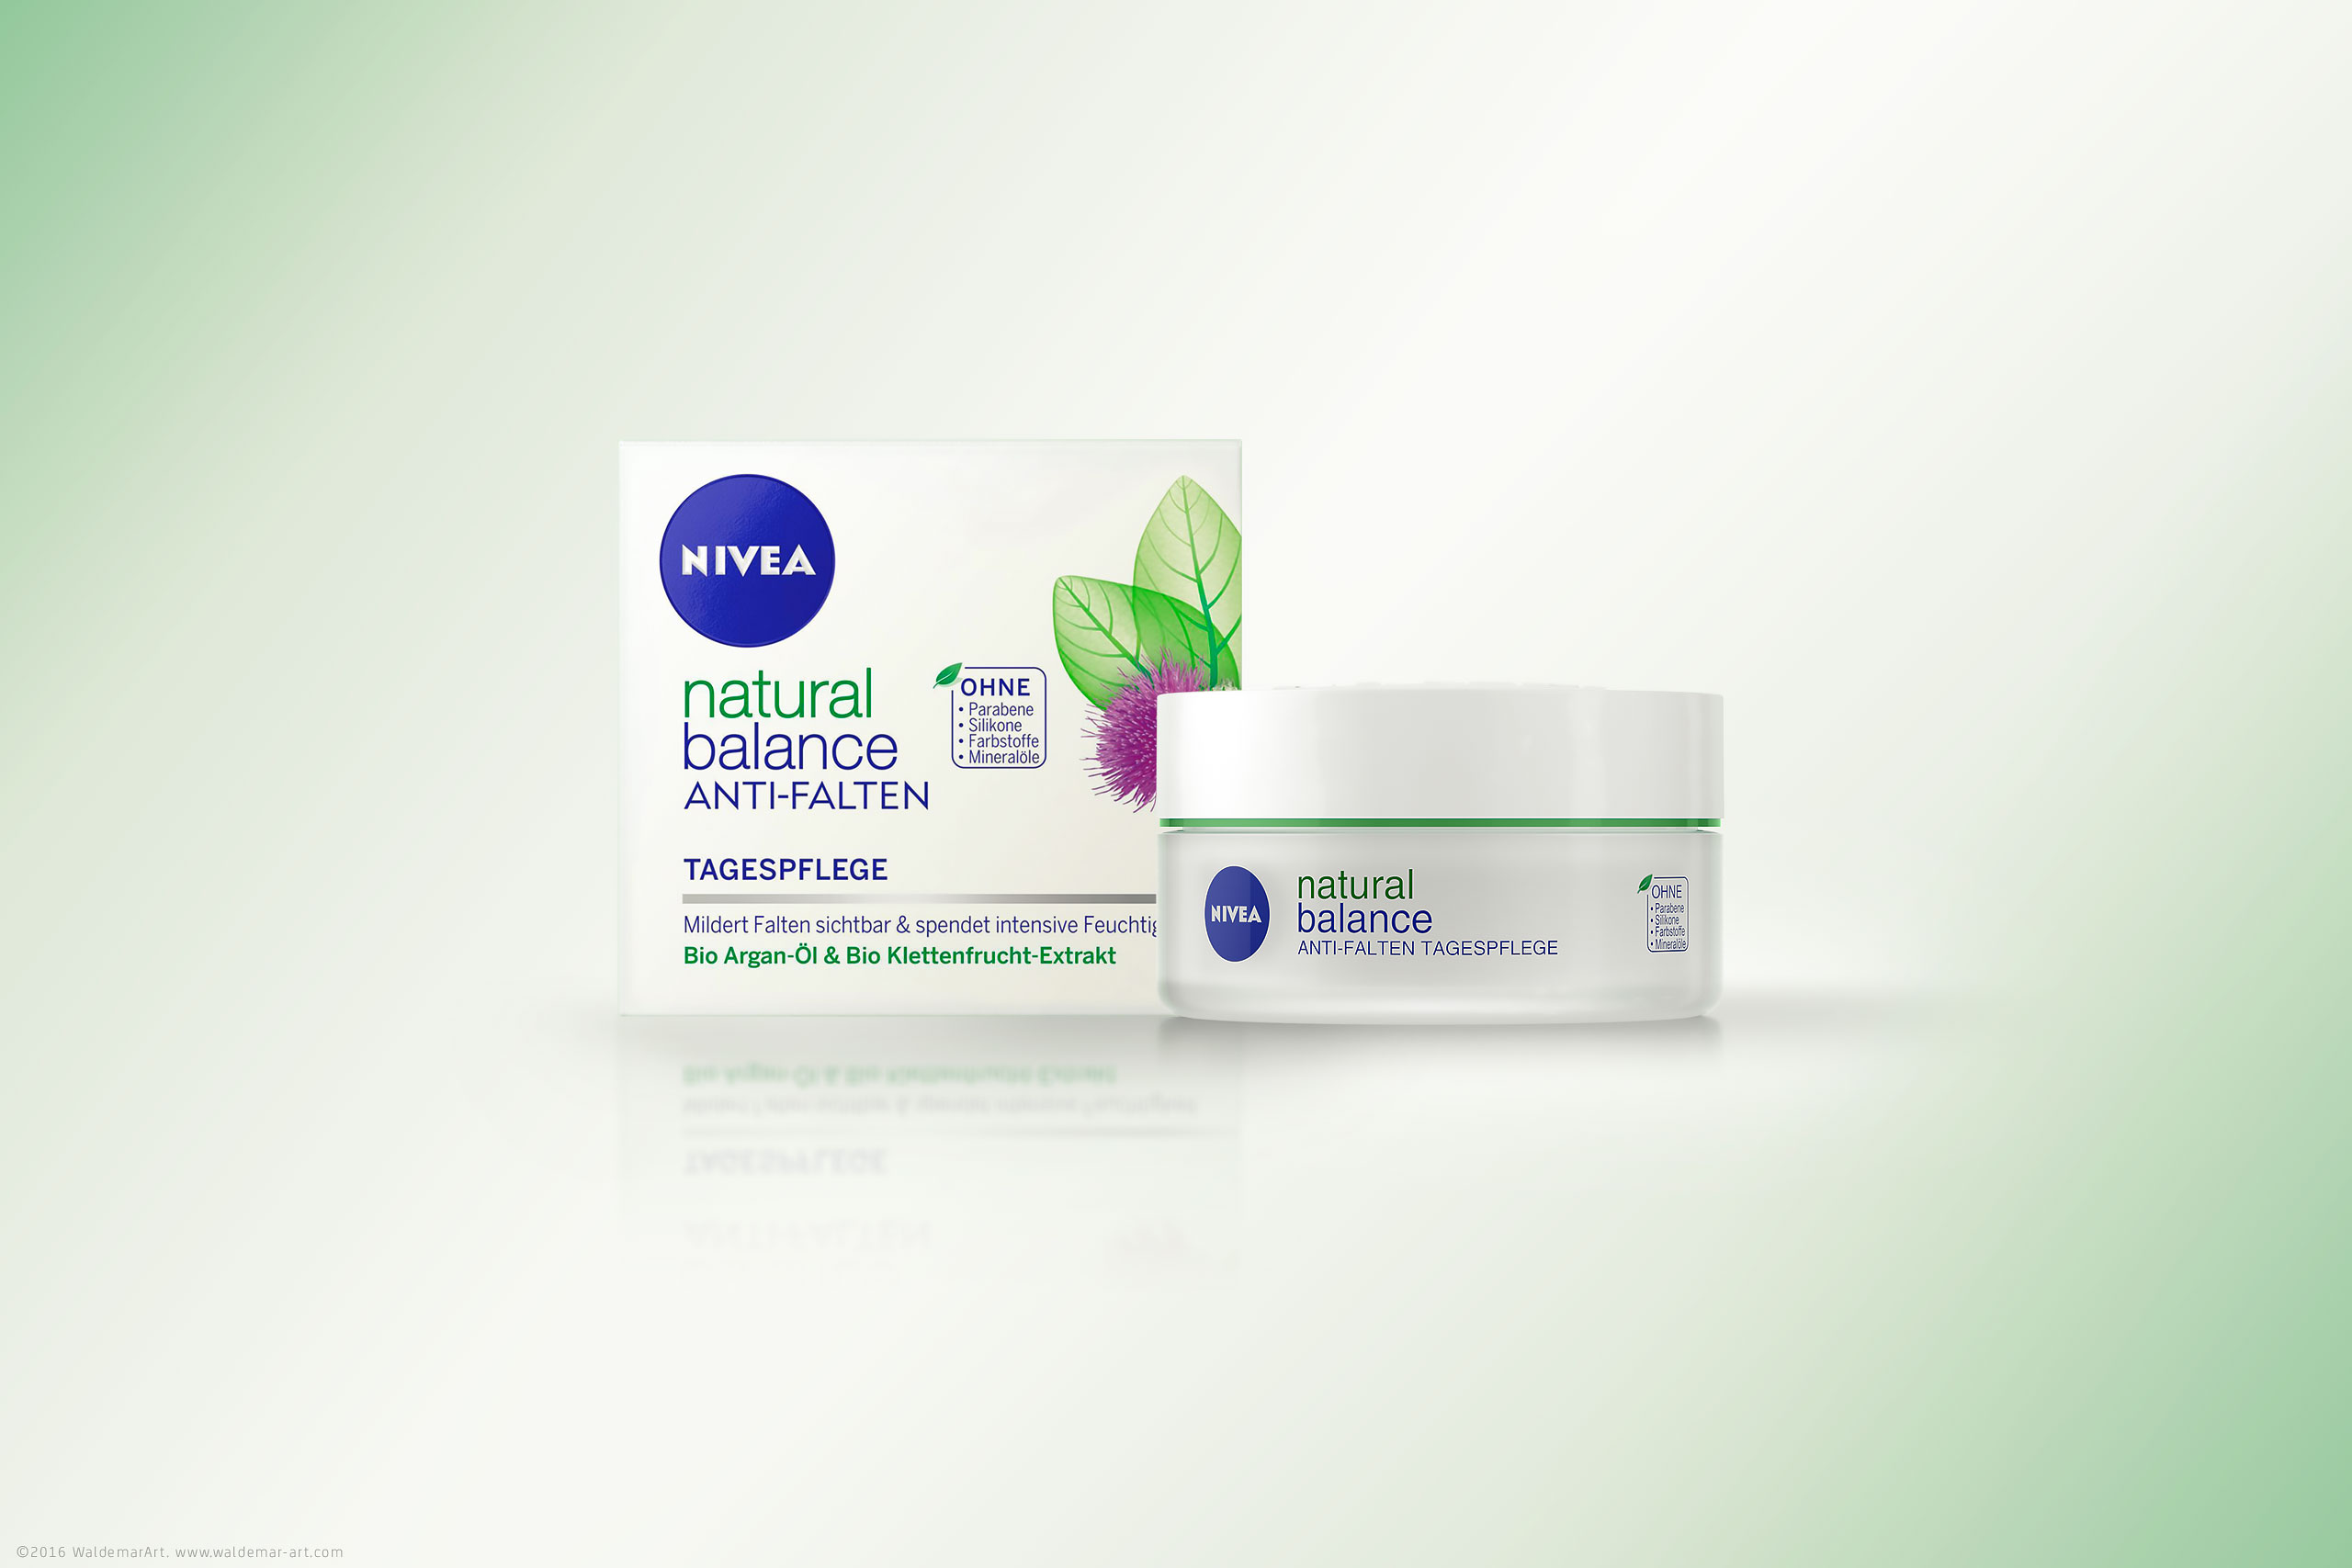 Nivea Natural Balance Anti Falten espflege Packaging 3d Visualization Wa Design Studio